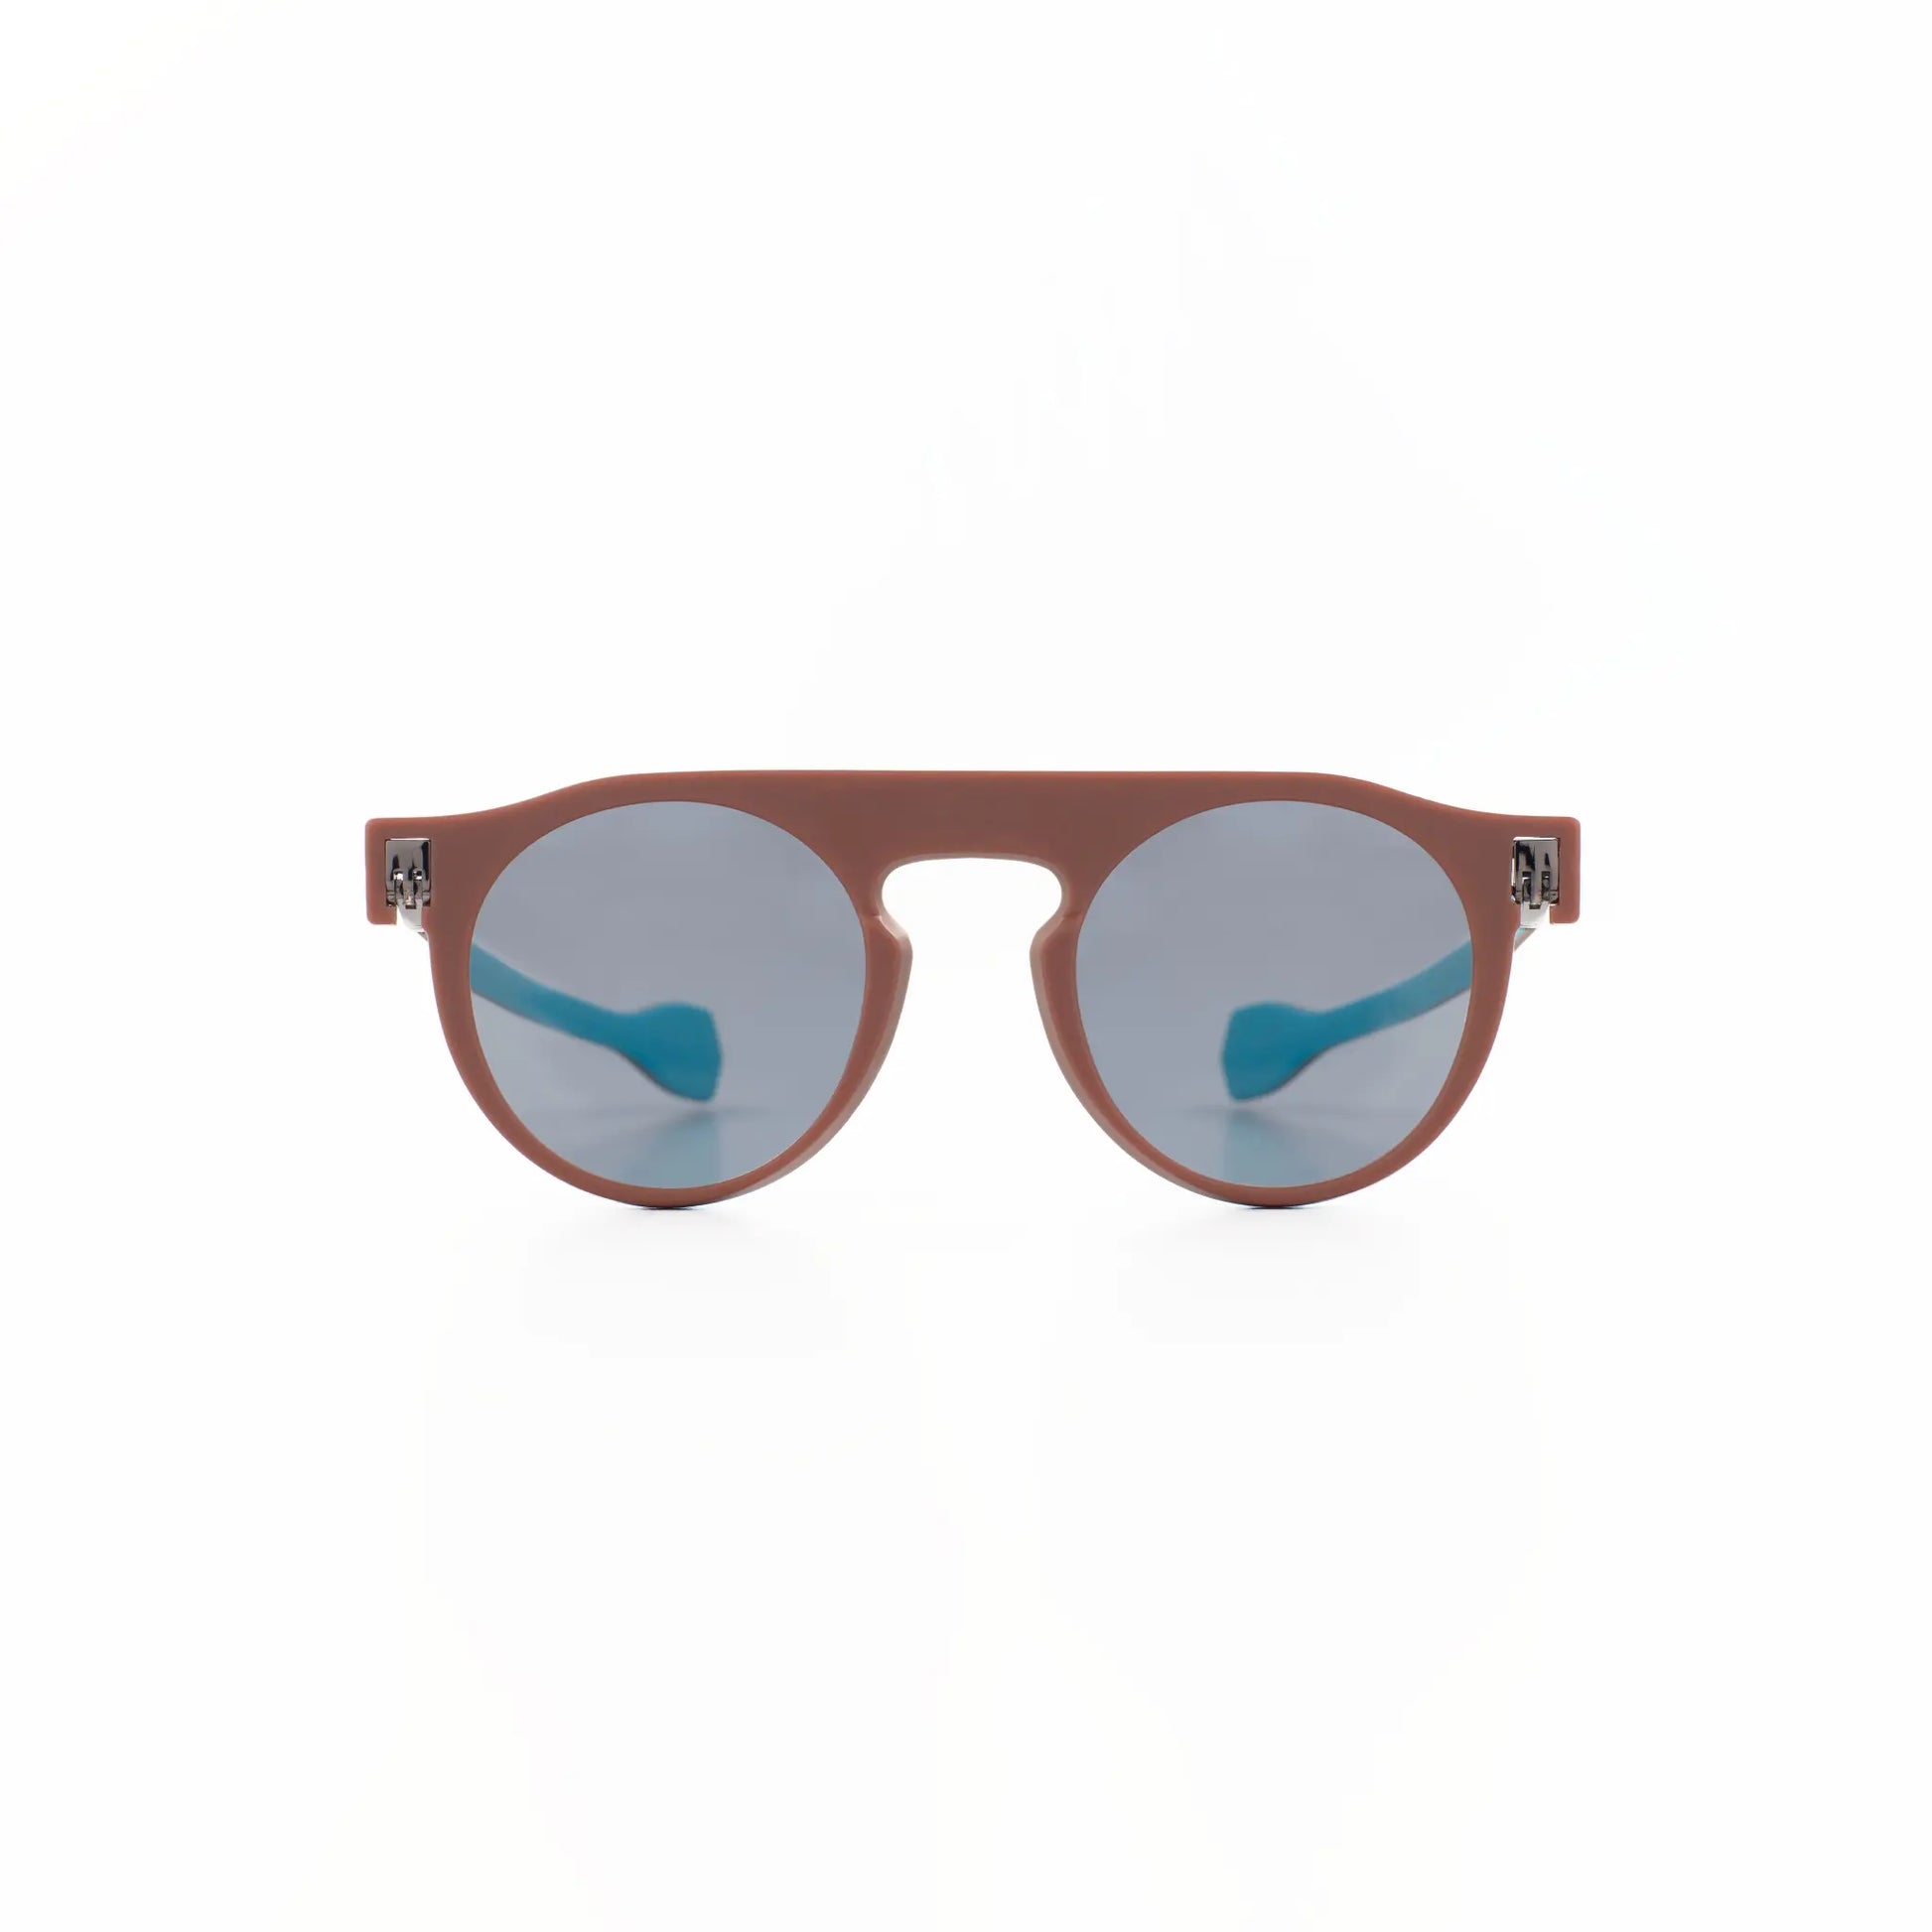 Reverso sunglasses brown & light blue reversible & ultra light front view 1